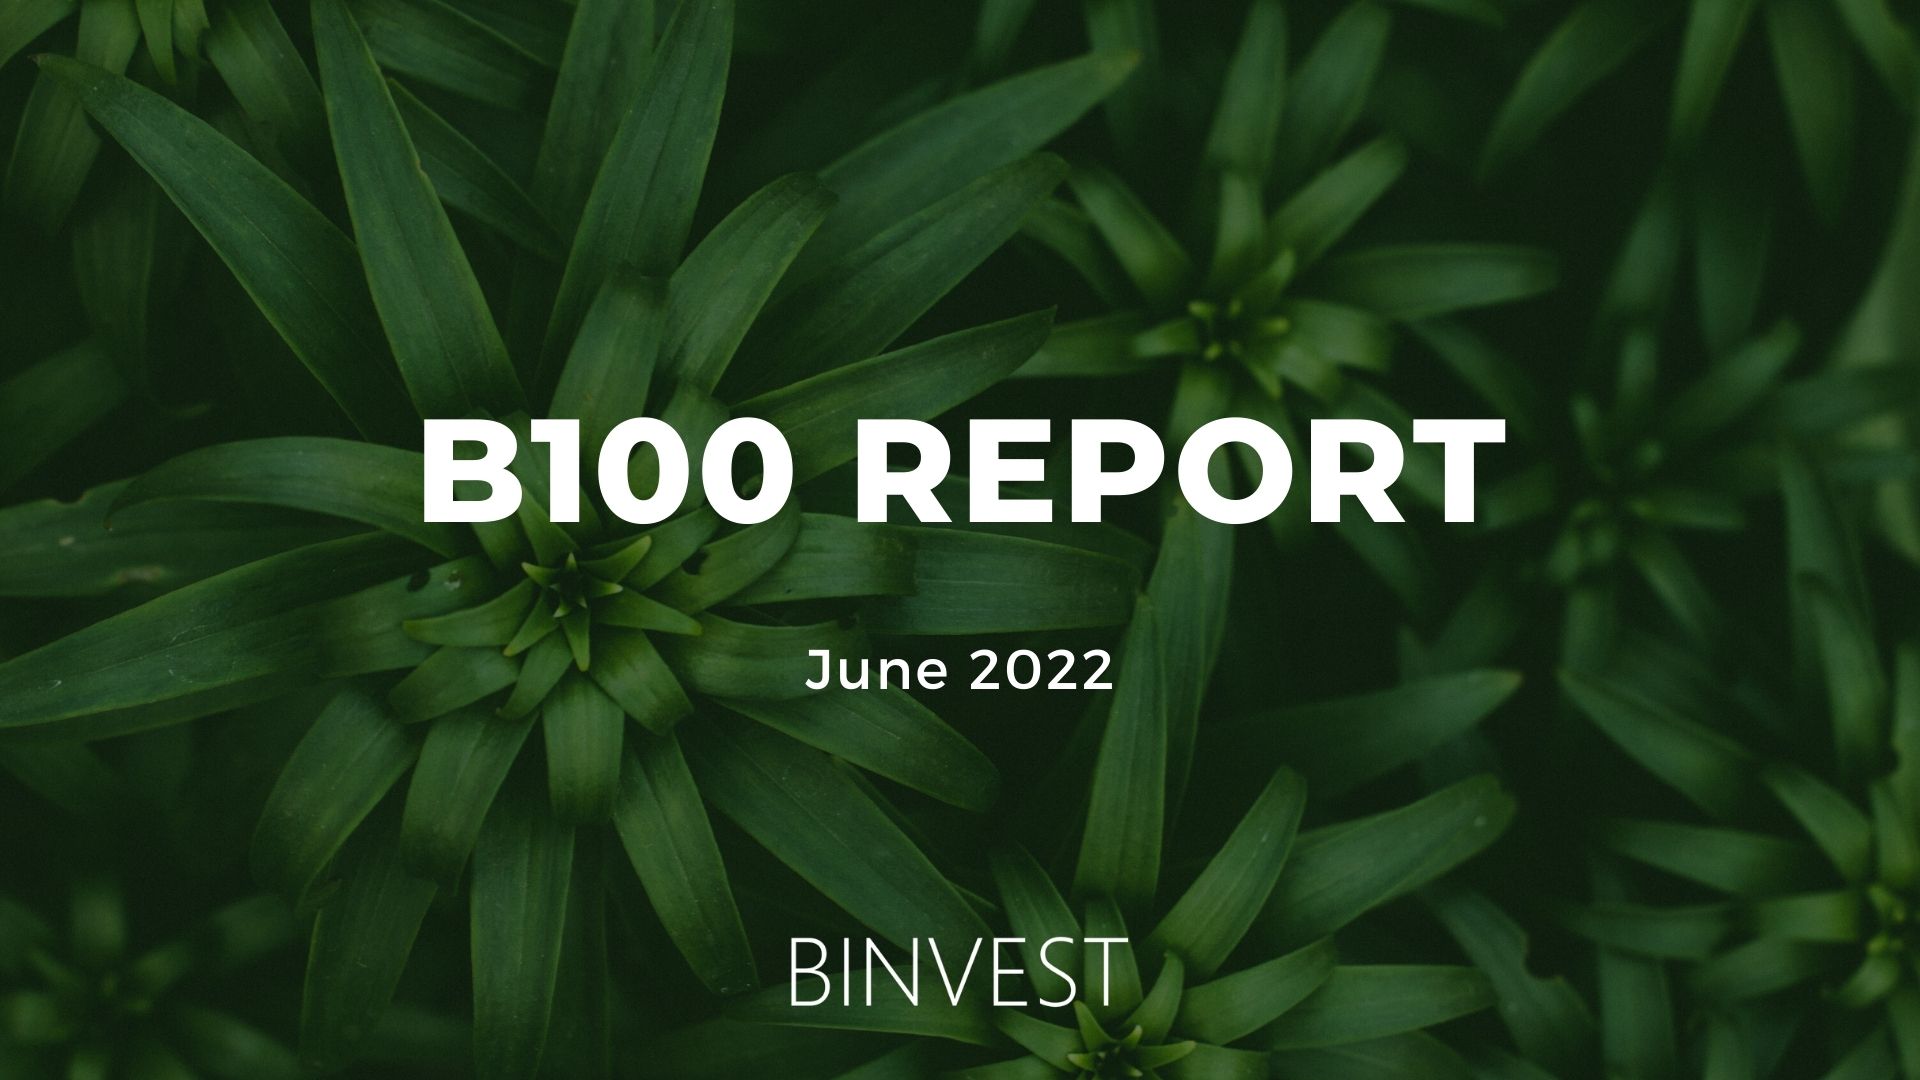 b100 fund report